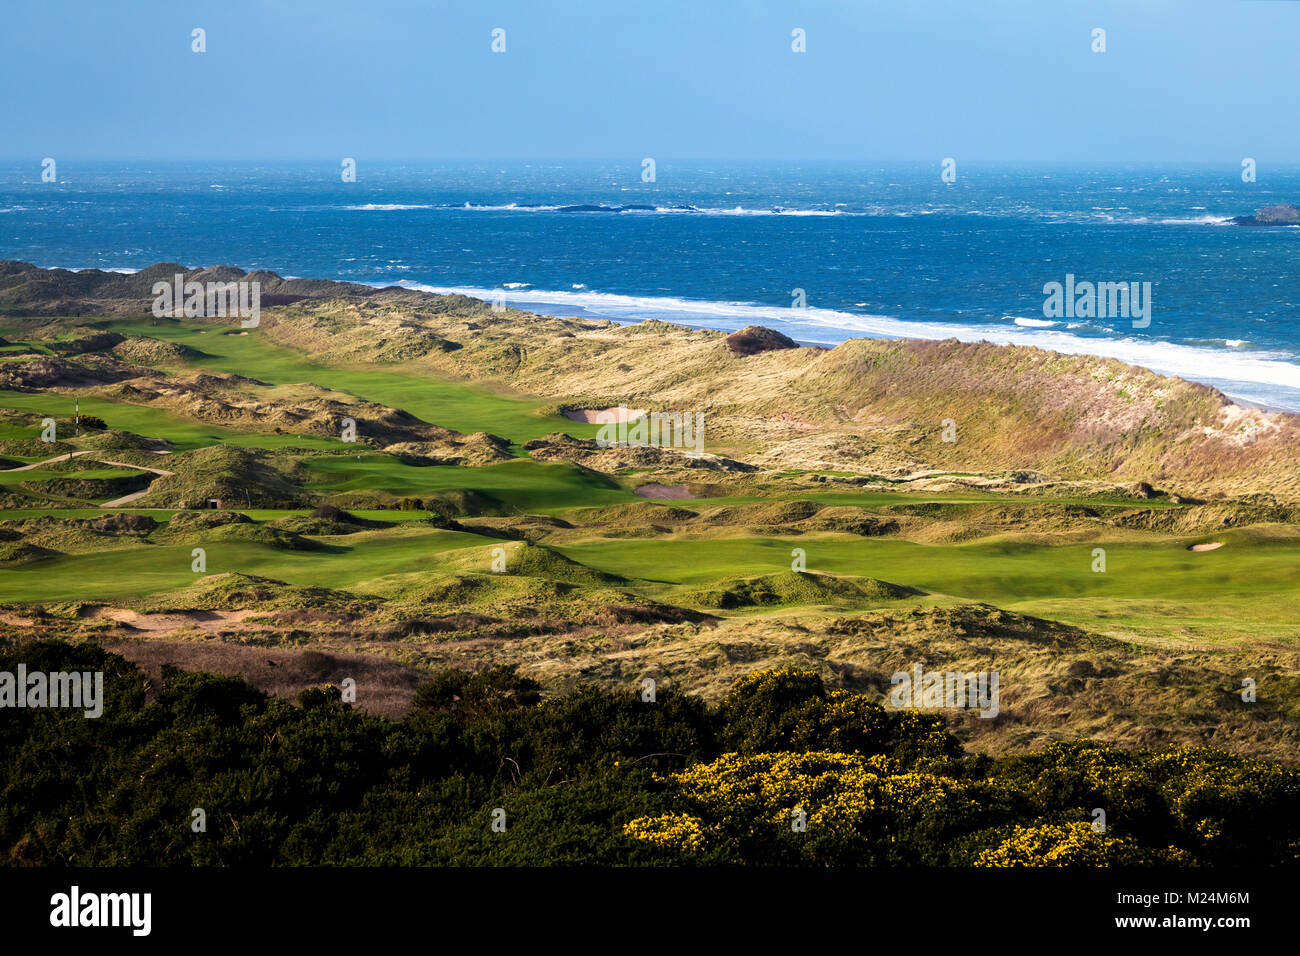 El Club de Golf Royal Portrush, Irlanda del Norte de 2018 Foto de stock